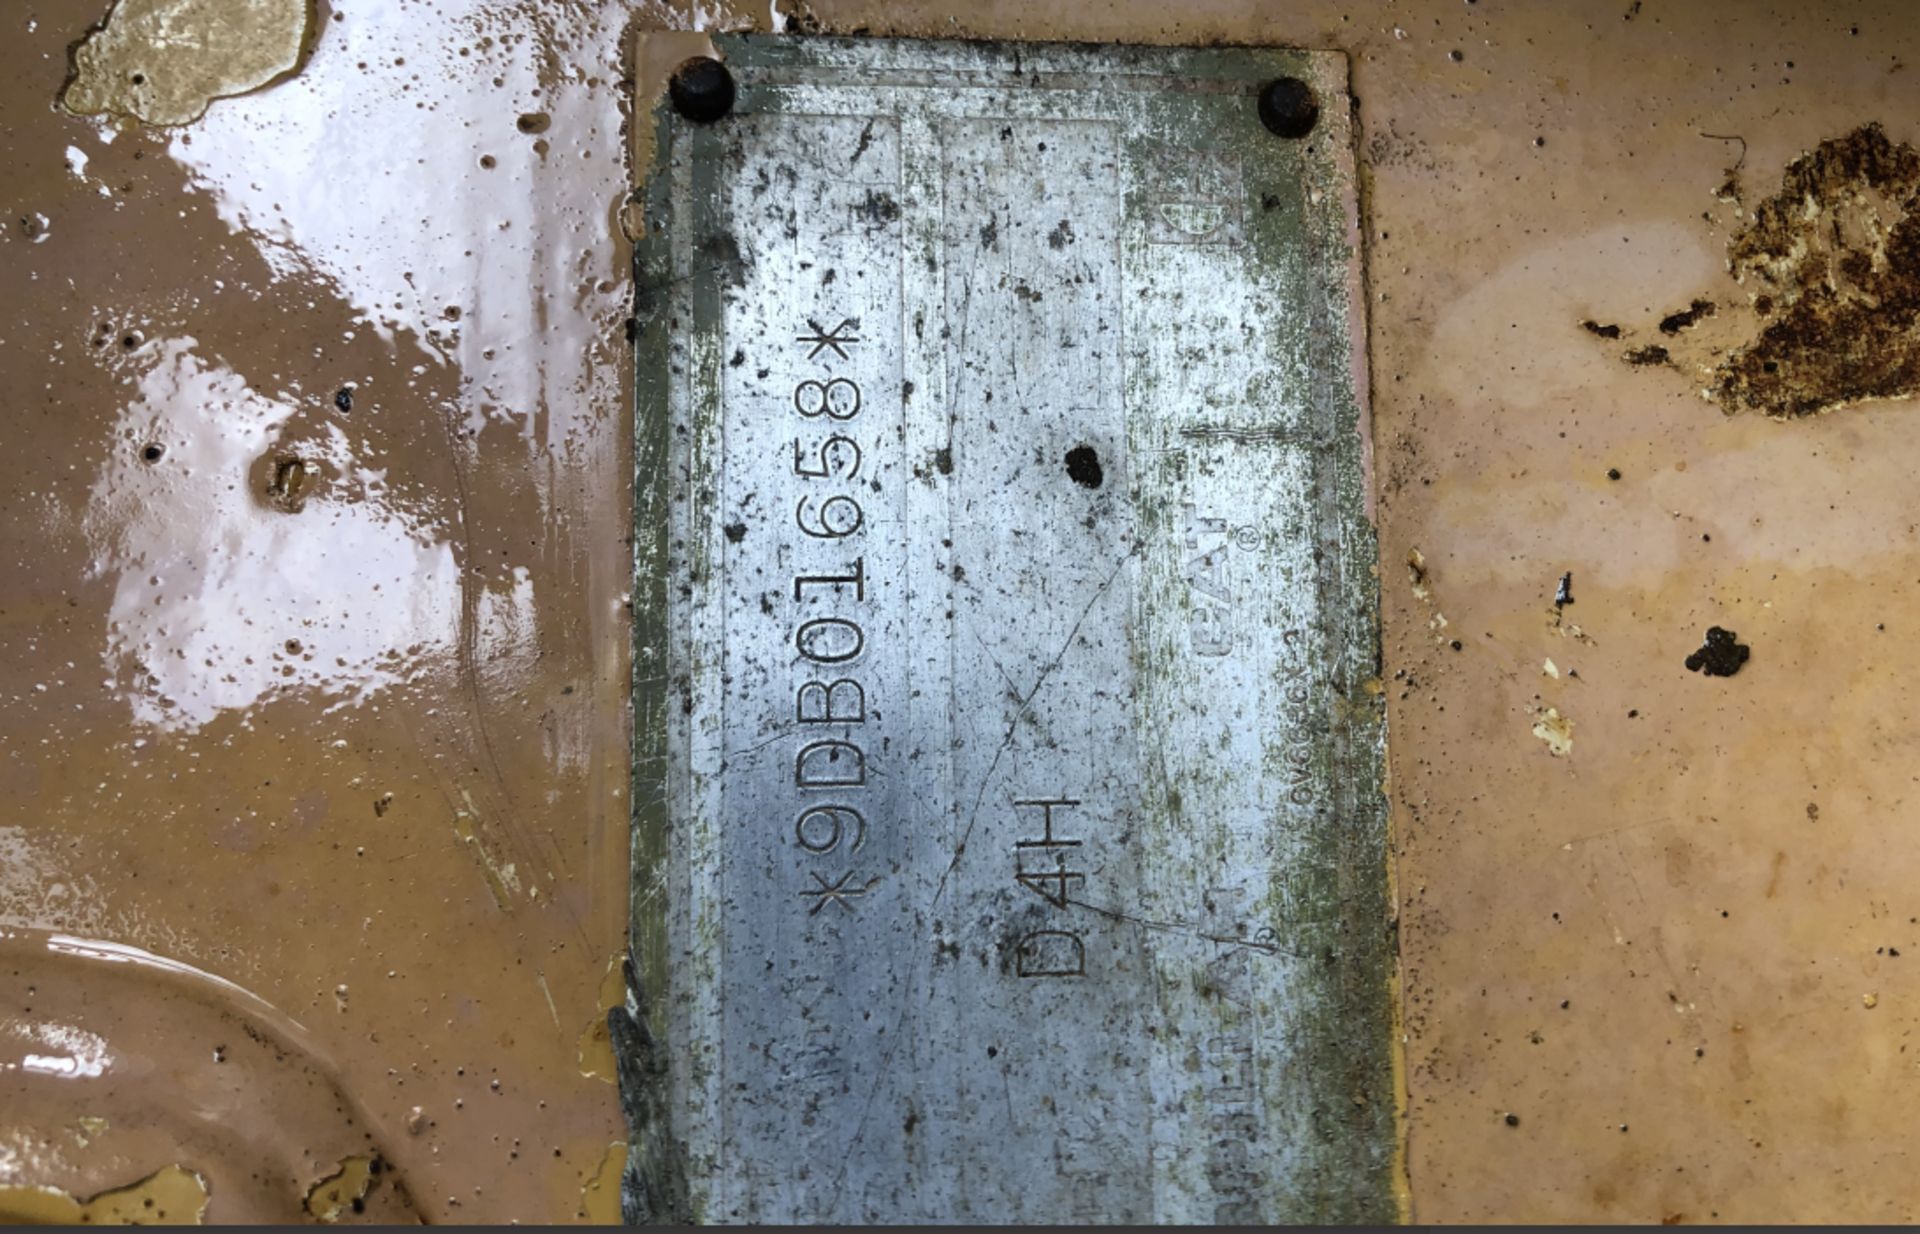 CATERPILLAR D4H LGP TRACKED DOZER | RECON ENGINE - Image 5 of 12